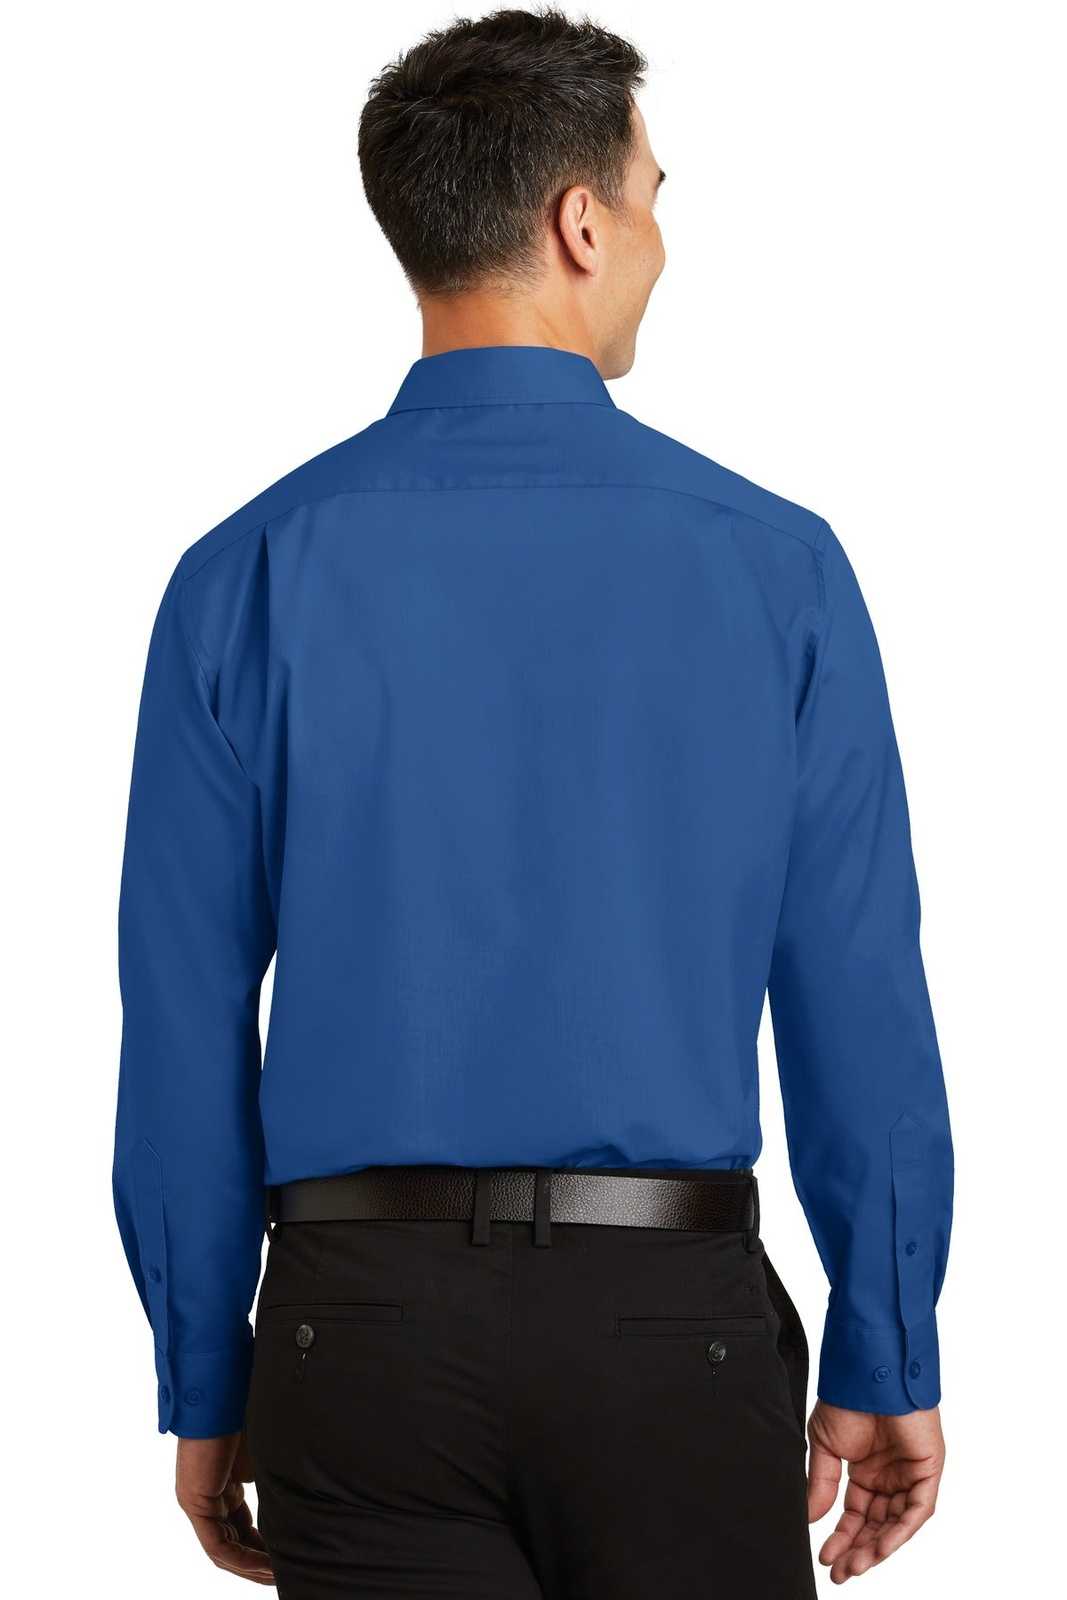 Port Authority S663 Superpro Twill Shirt - True Blue - HIT a Double - 2